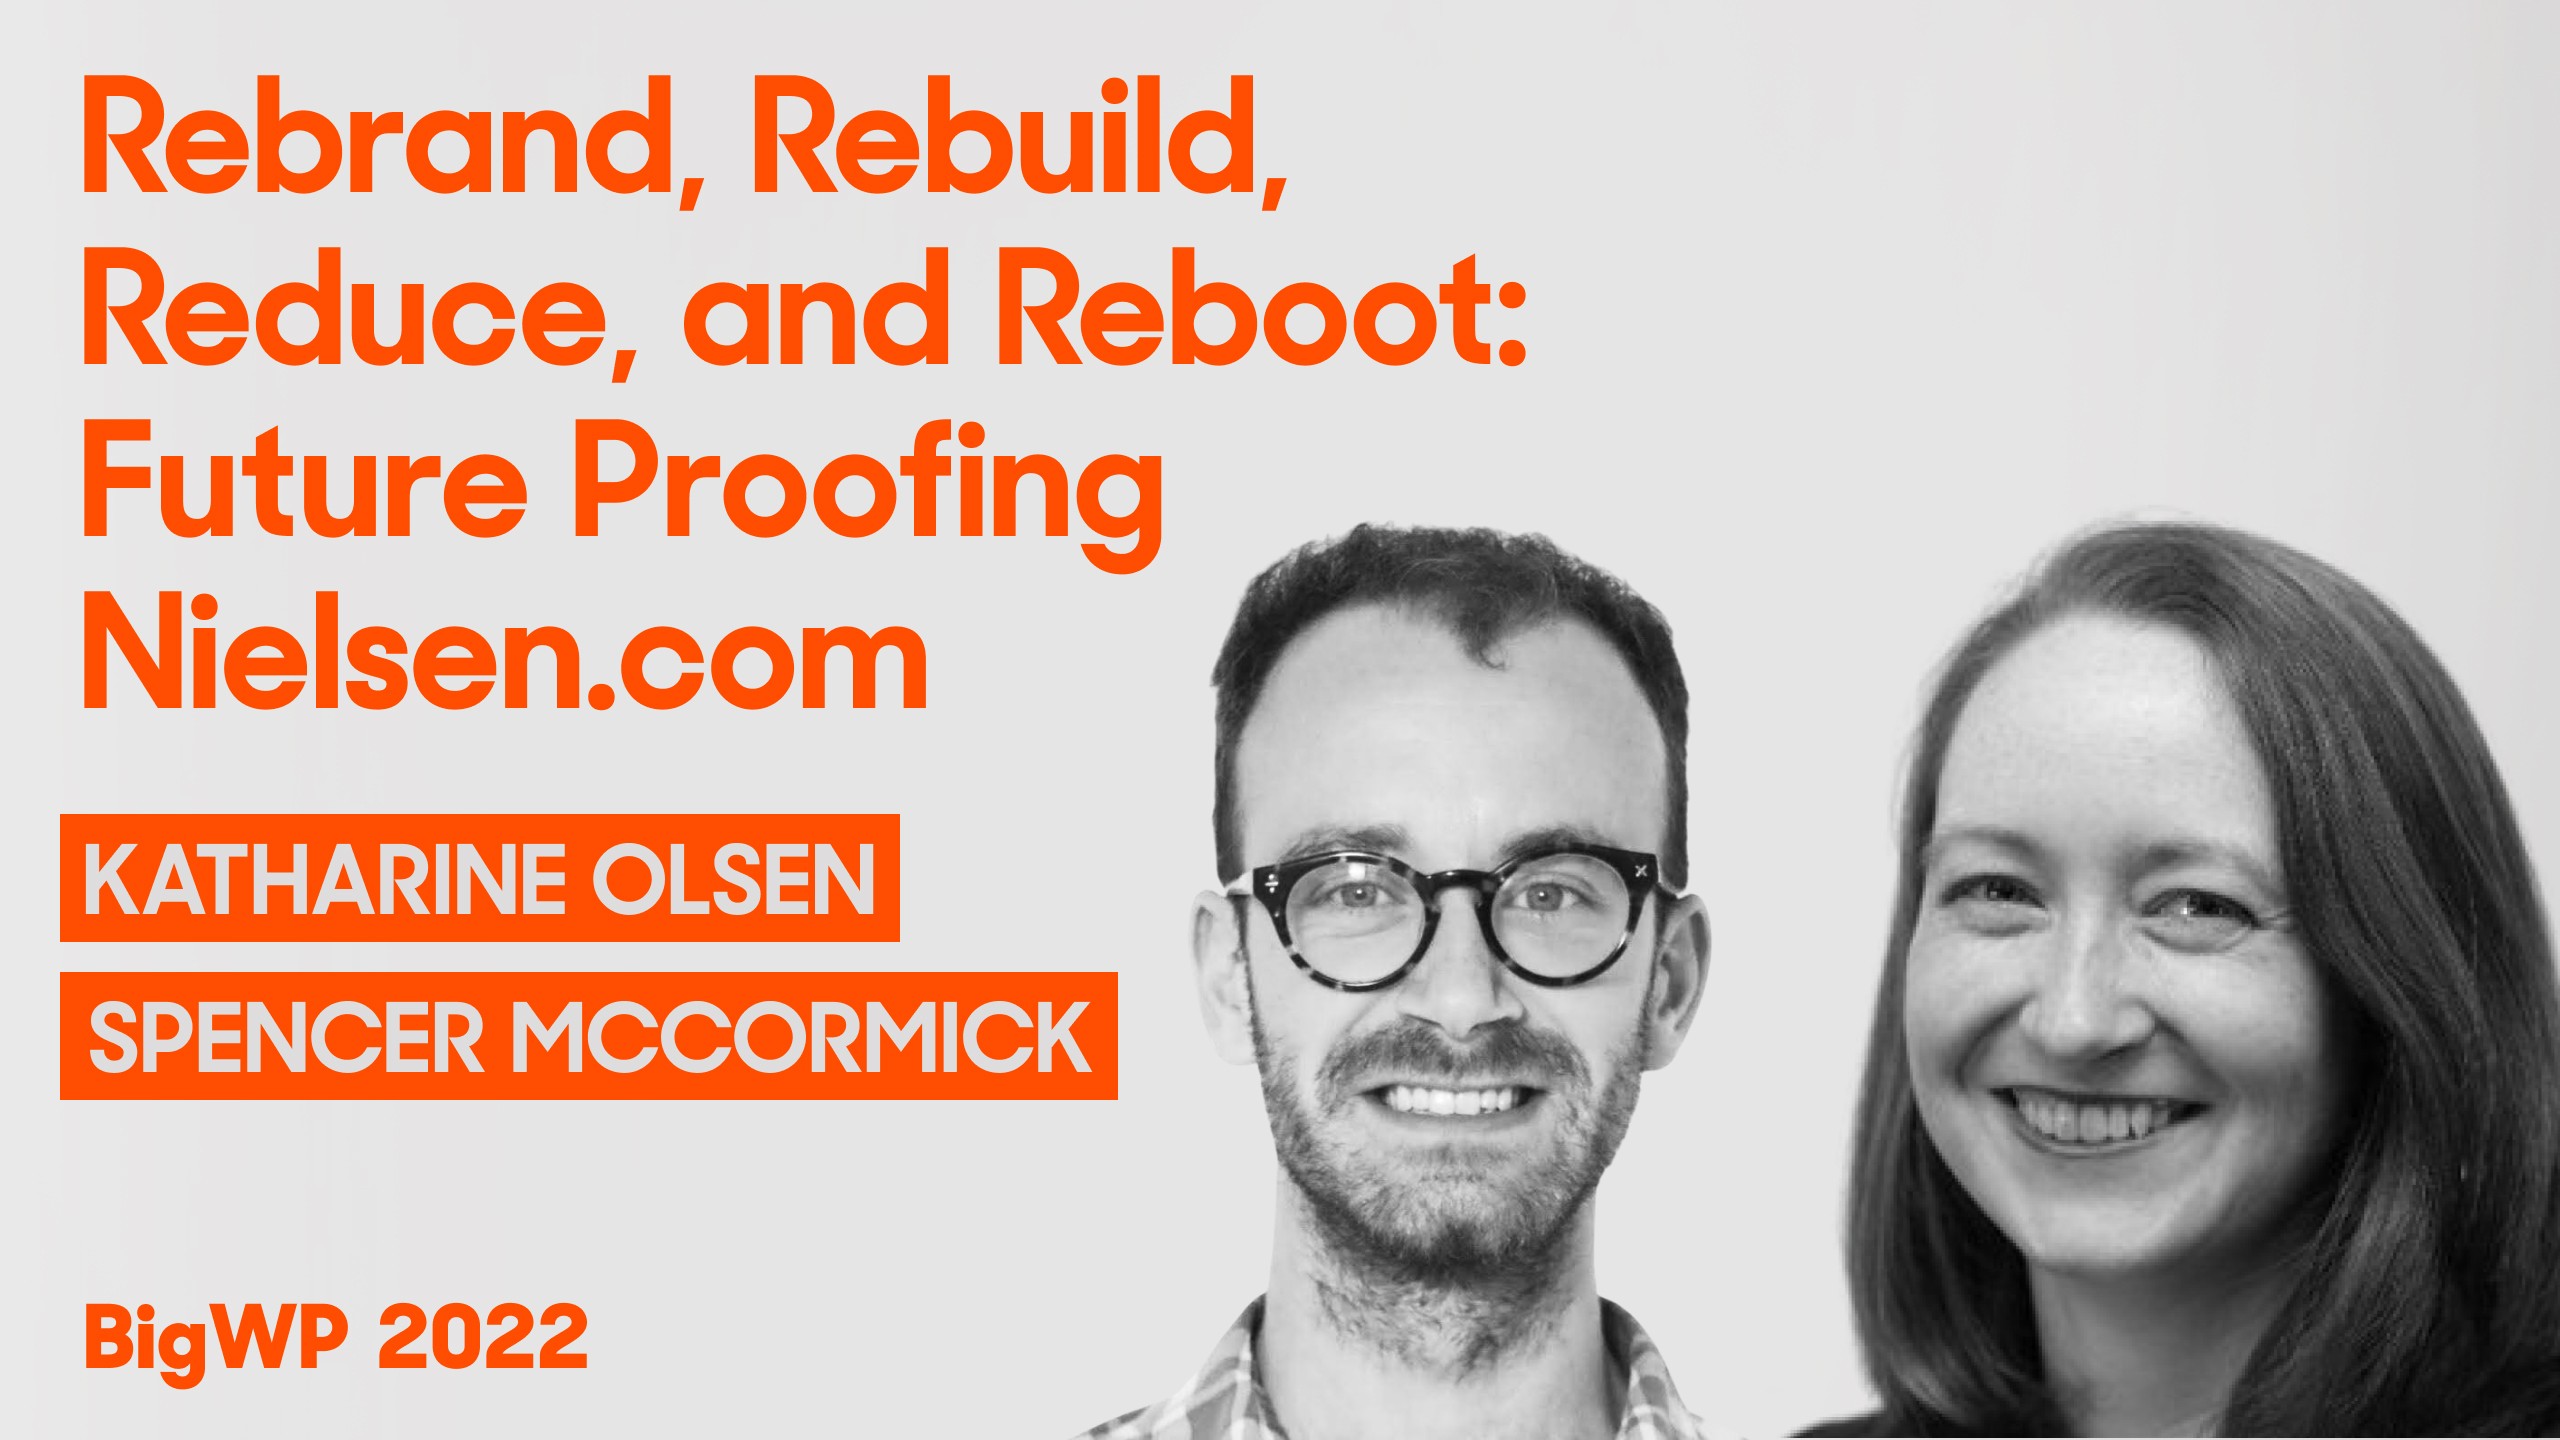 Rebrand, Rebuild, Reduce, and Reboot: Future Proofing Nielsen.com